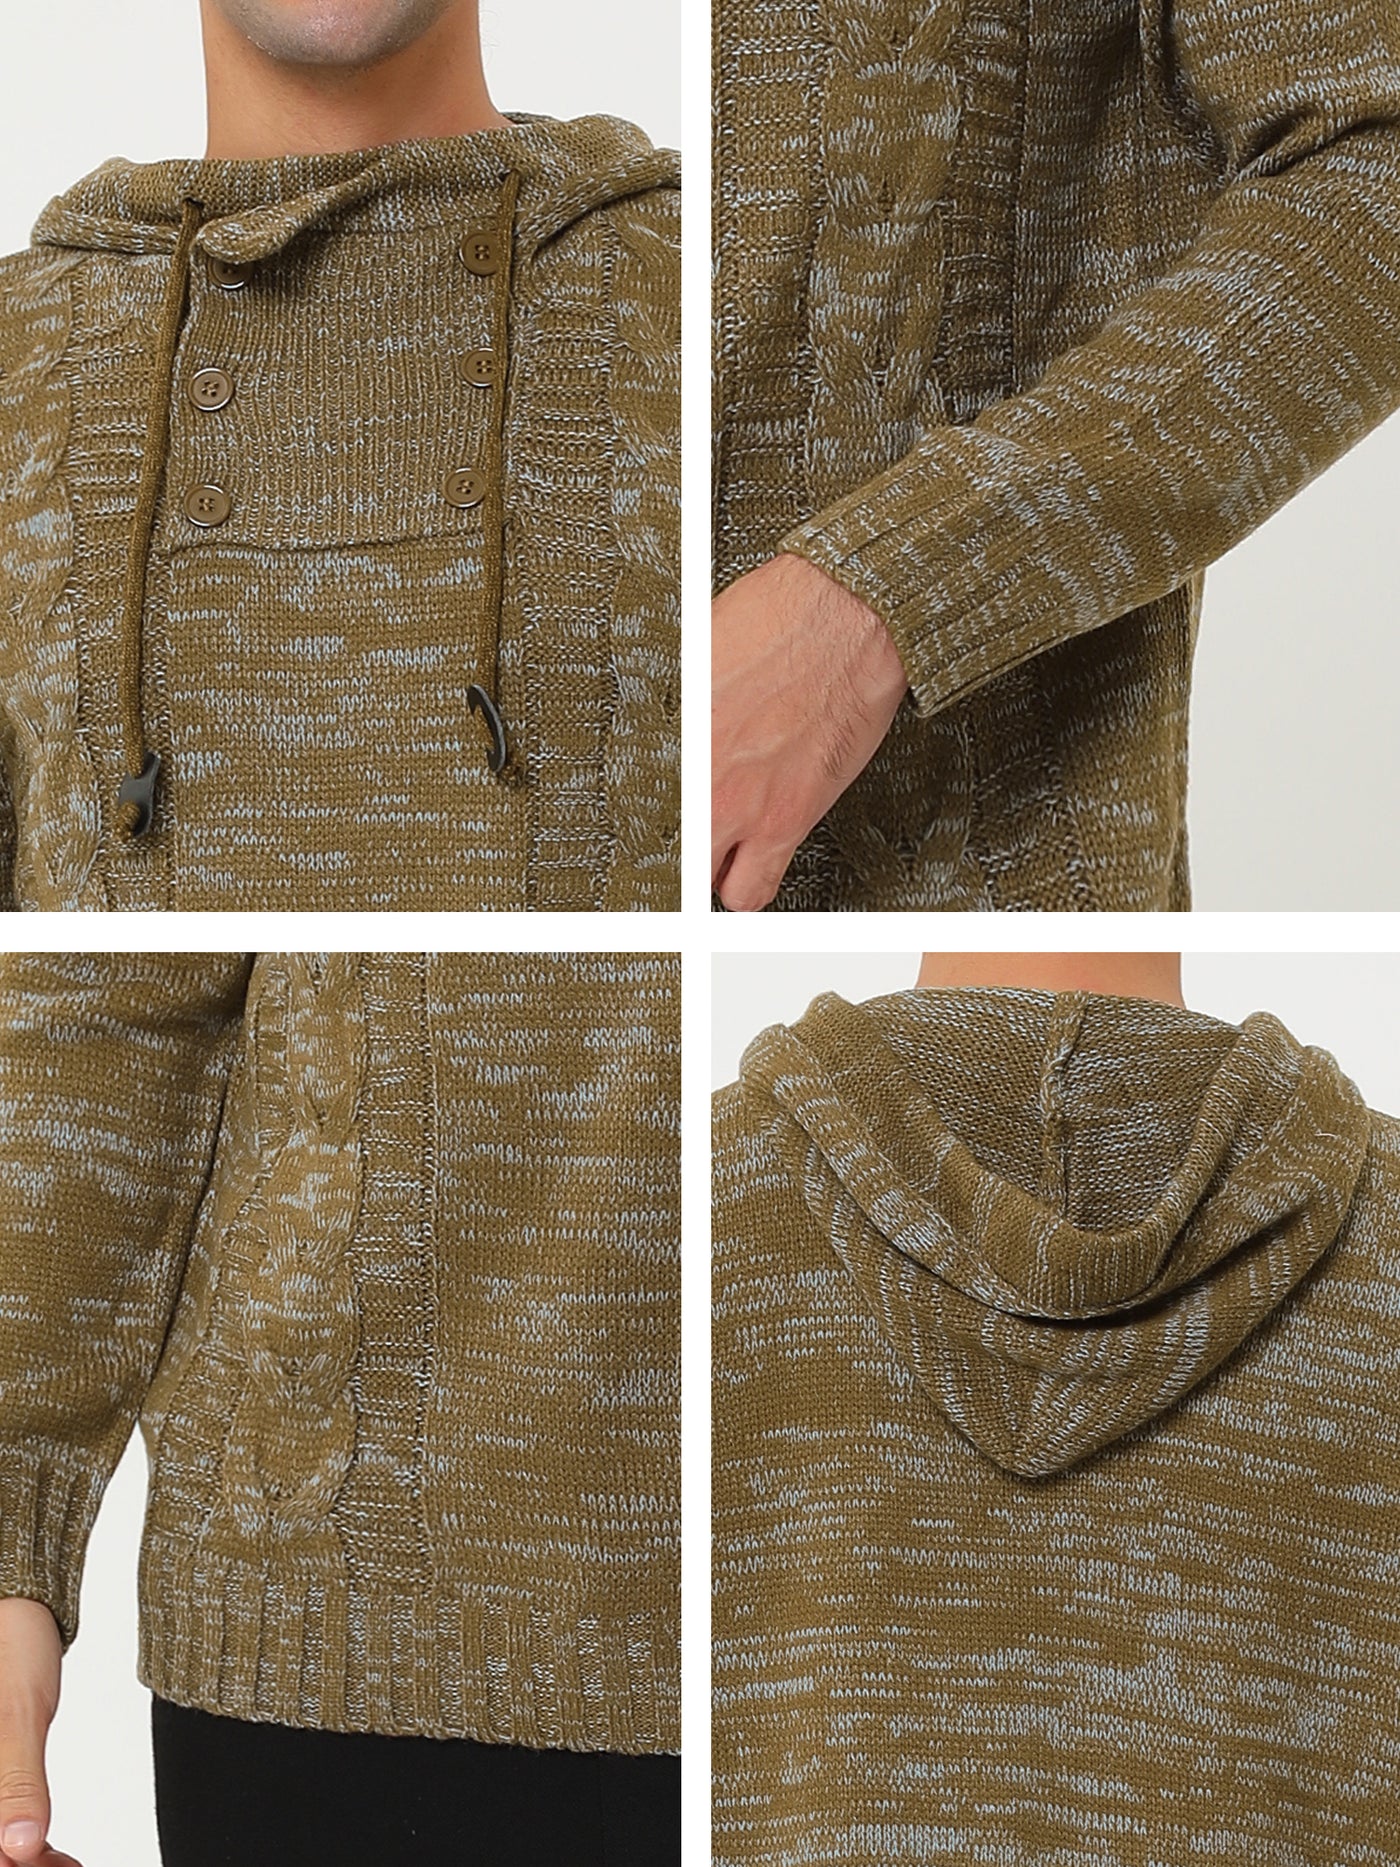 Bublédon Winter Drawstring Hooded Long Sleeve Knit Pullover